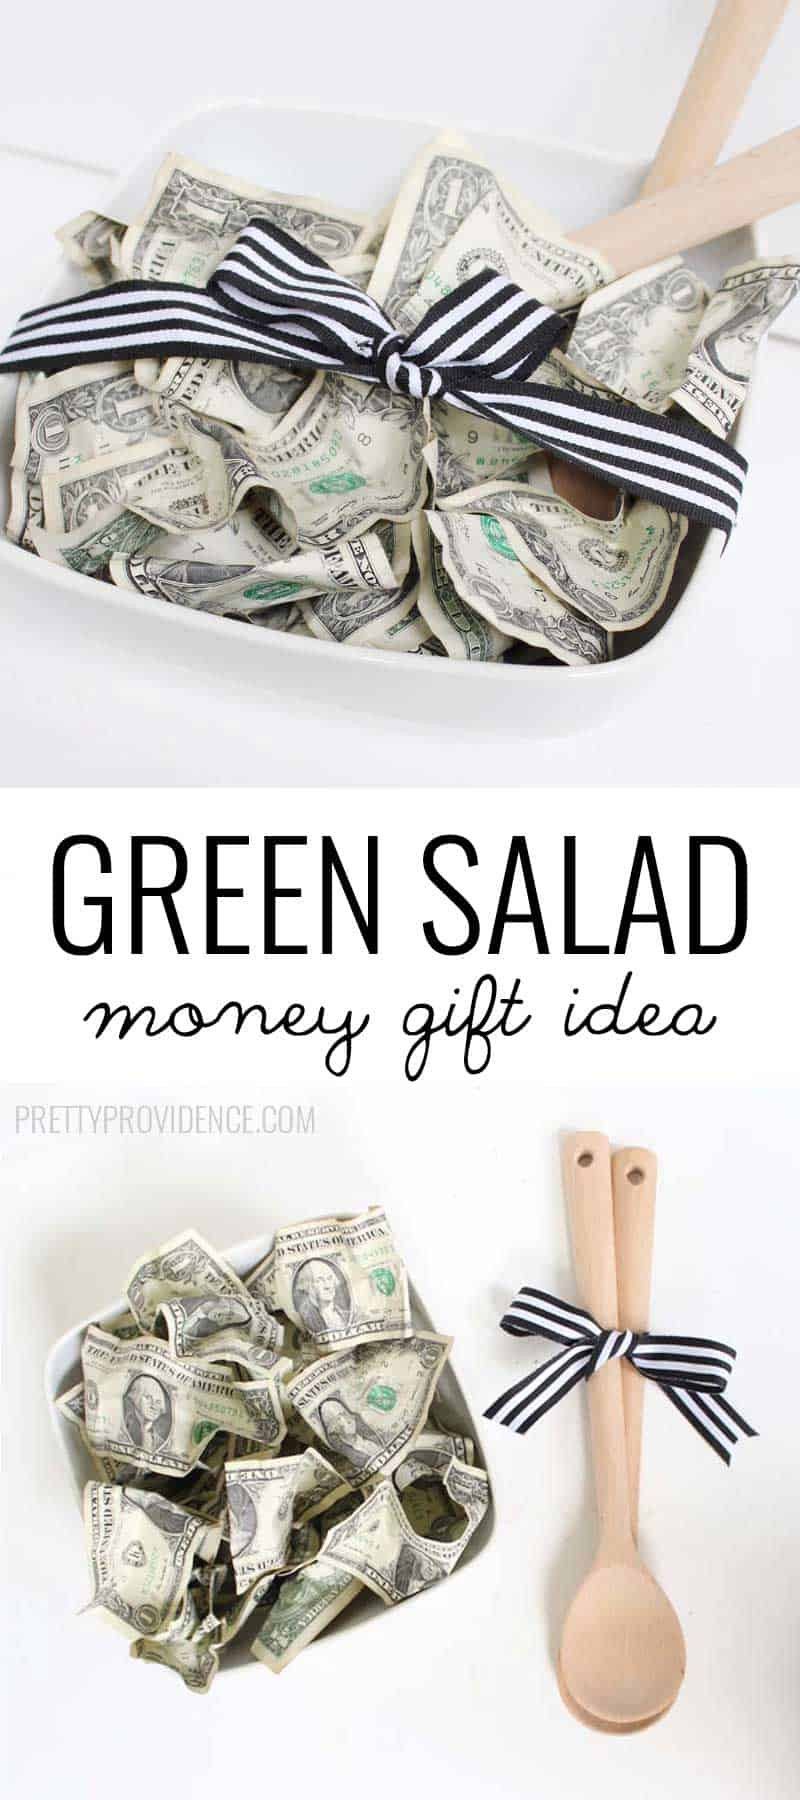 Wedding Gift Money Ideas
 Green Salad Money Gift Idea Pretty Providence